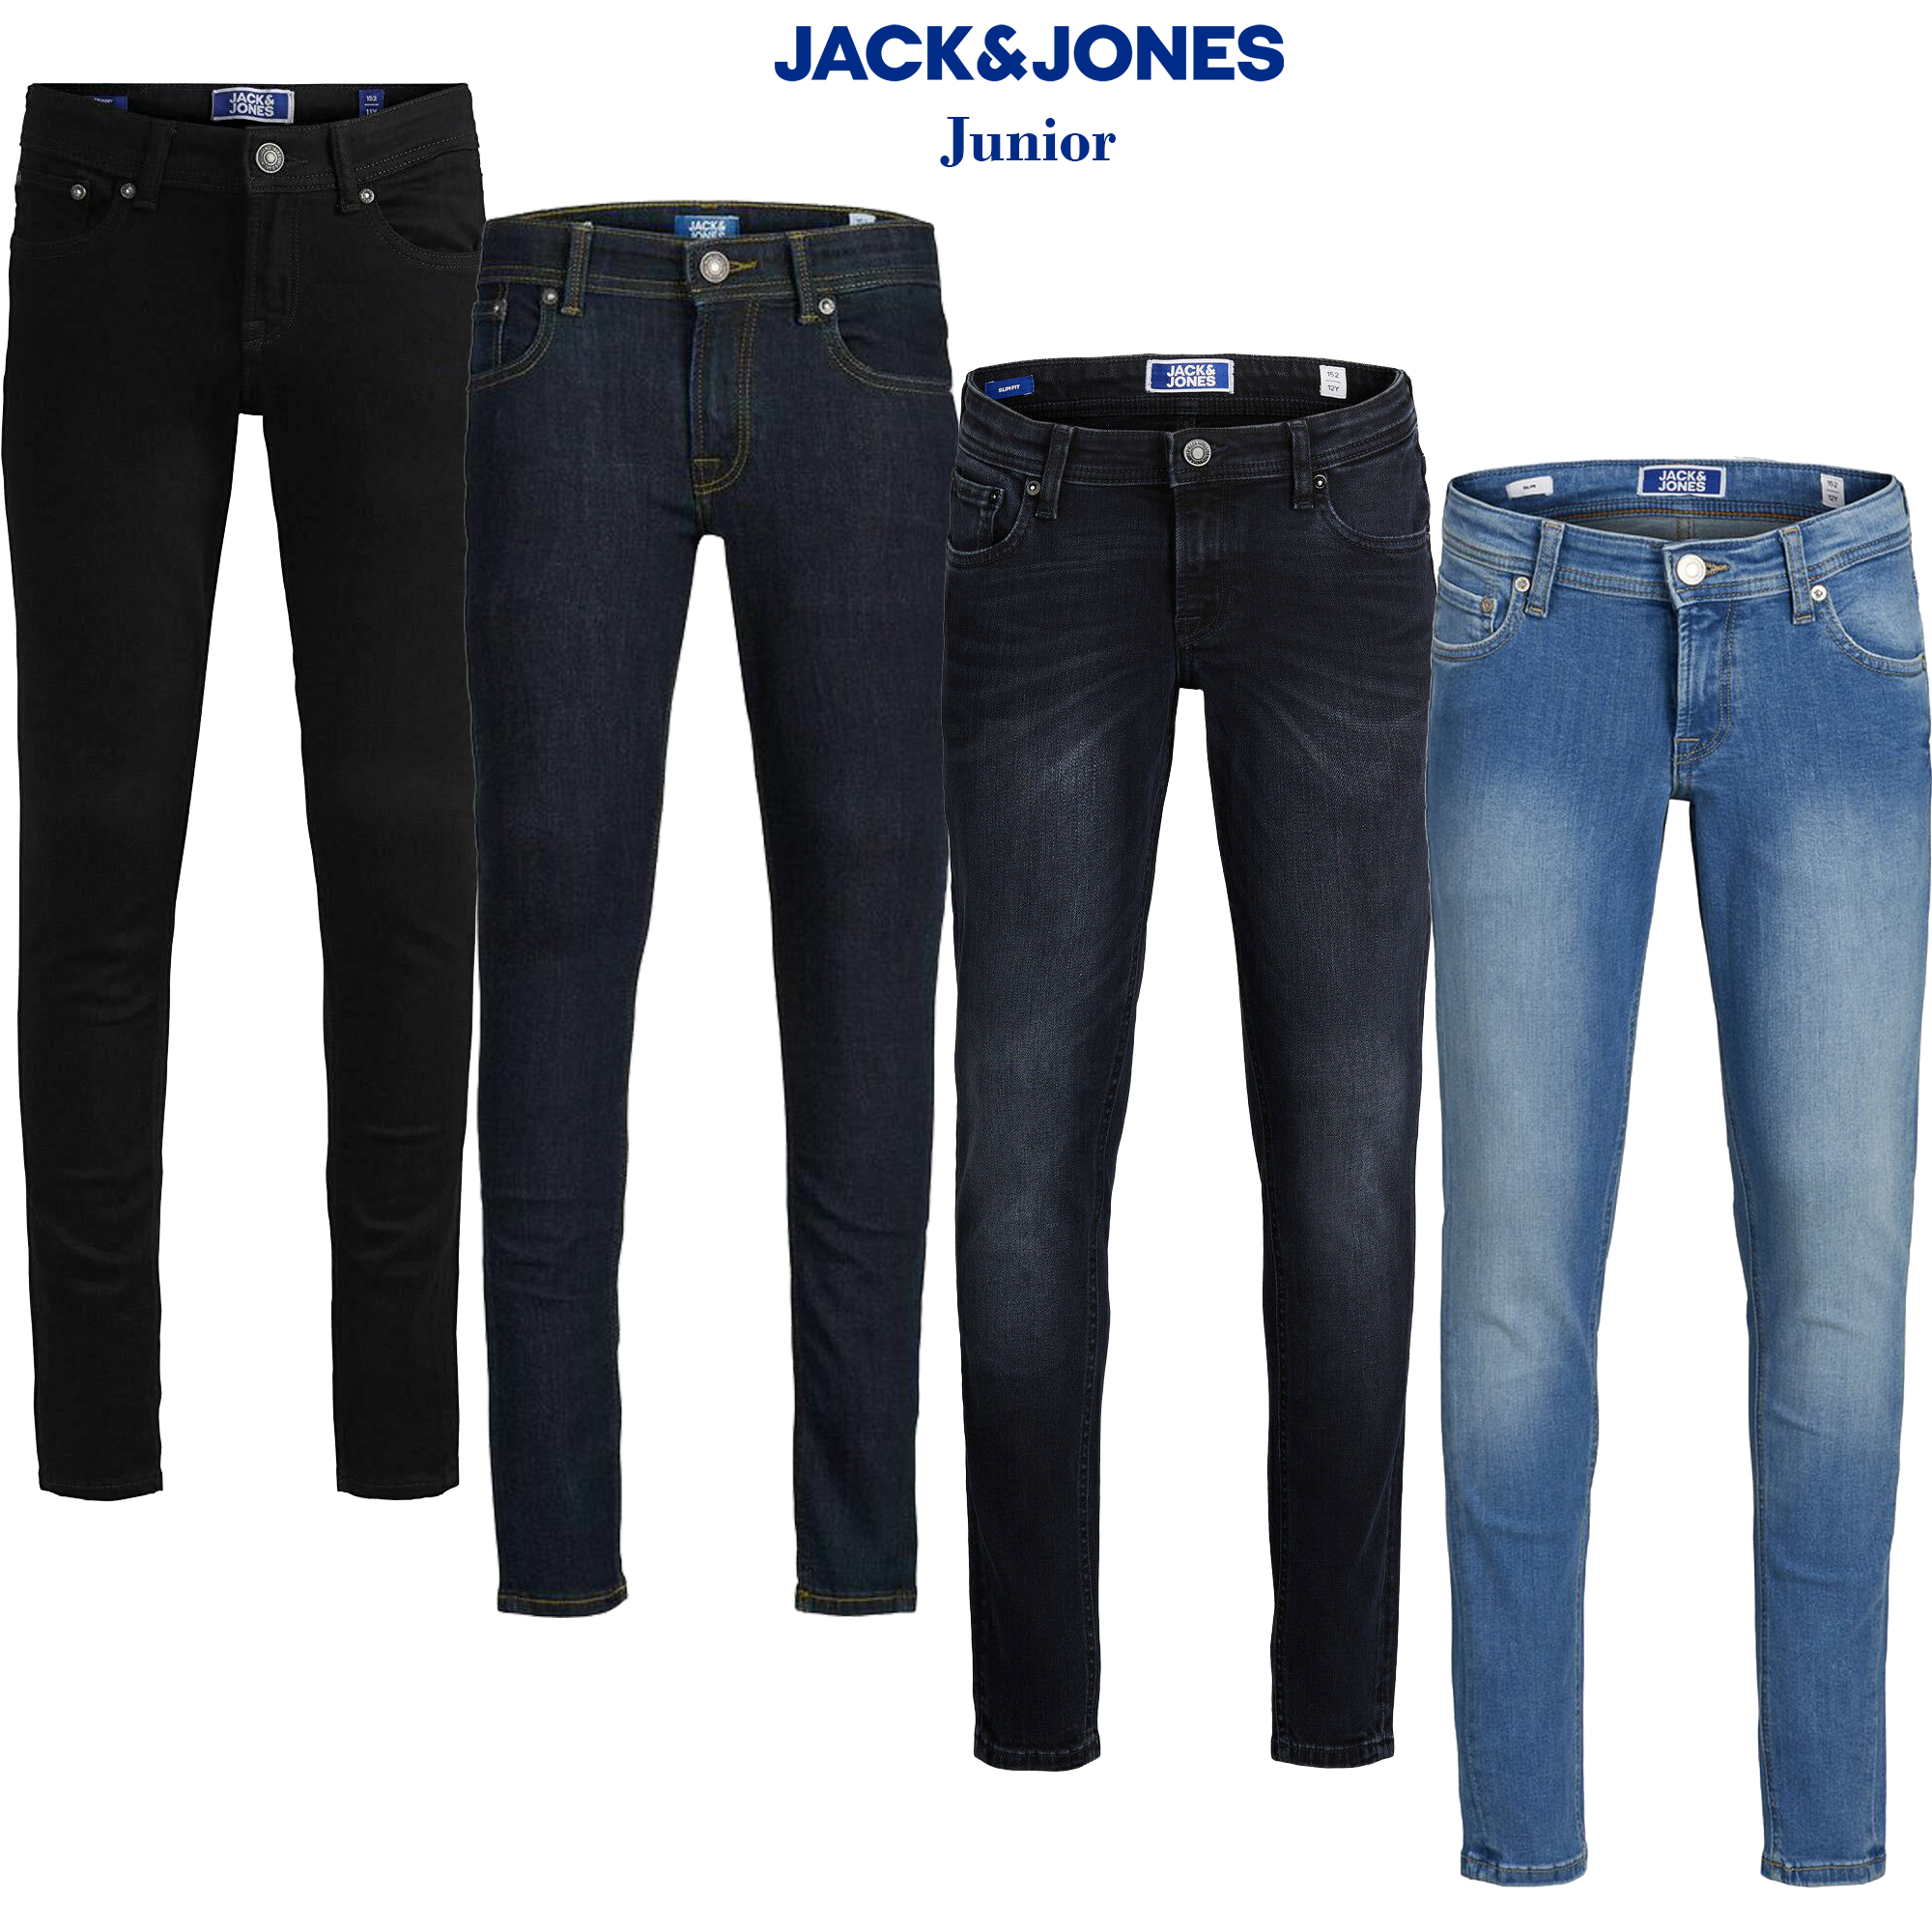 Wholesale Jack & Jones Men's Clothing Lot